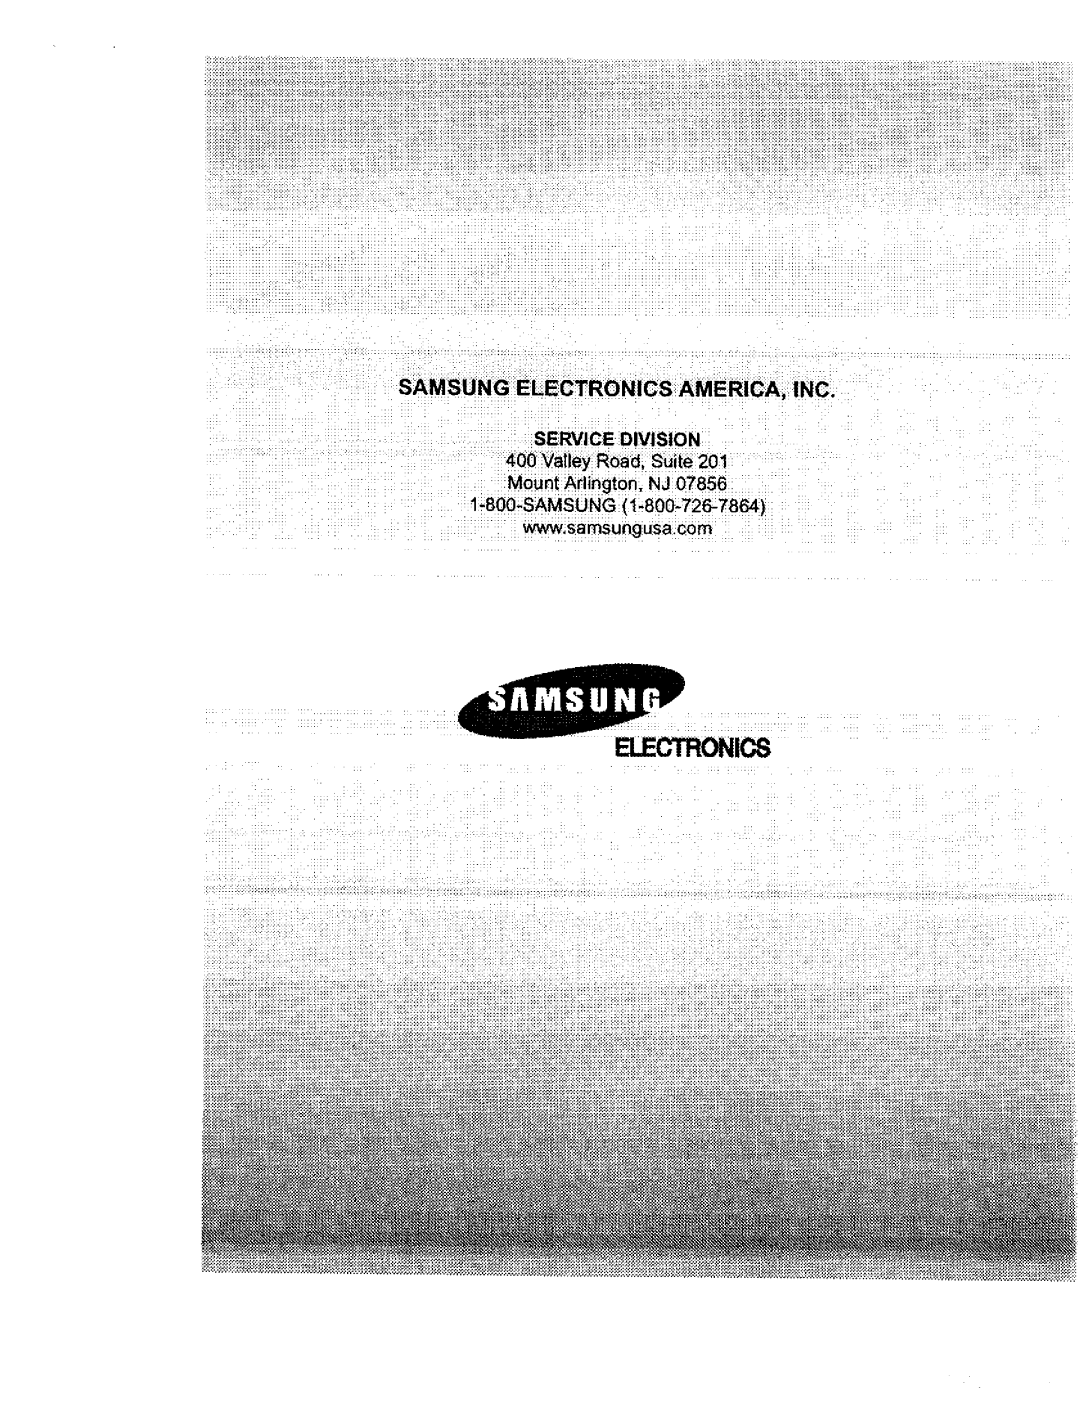 Samsung DS660T manual SERVICE DIVISION 400 Valley Road, Suite, Mount Arlington, NJ 1-800-SAMSUNG, www,samsungusa corn 